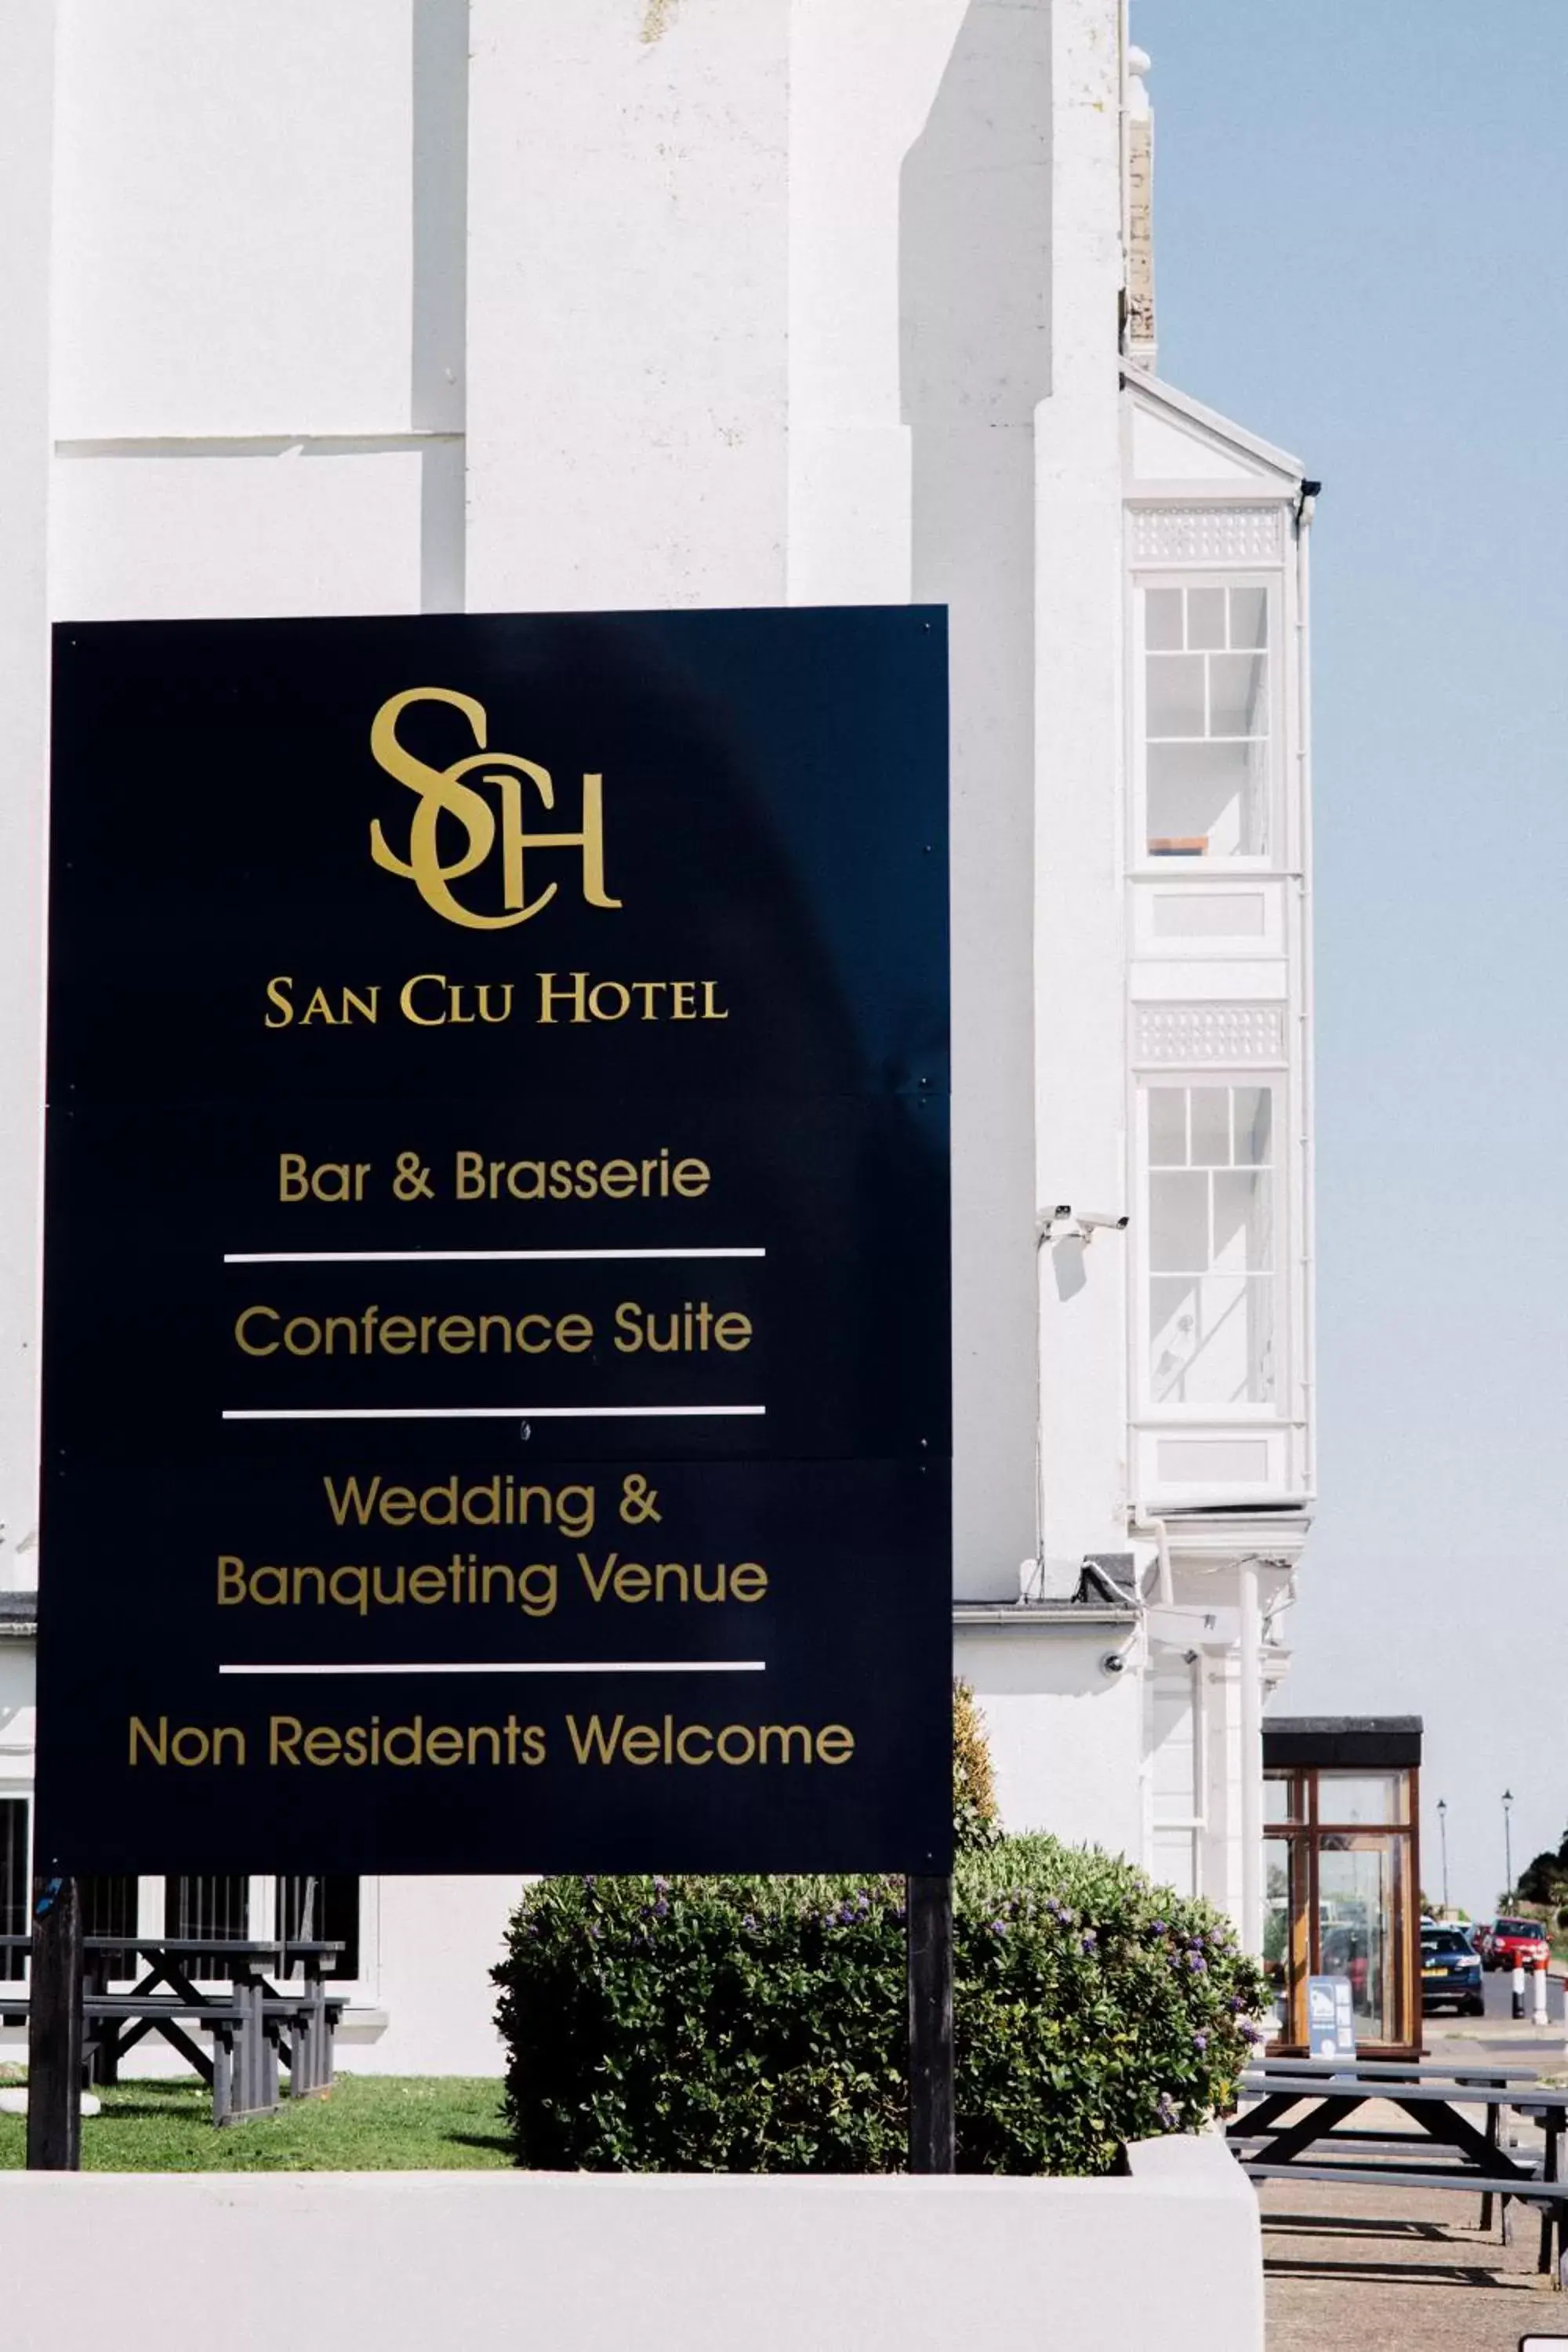 Property logo or sign in San Clu Hotel, Bar & Brasserie